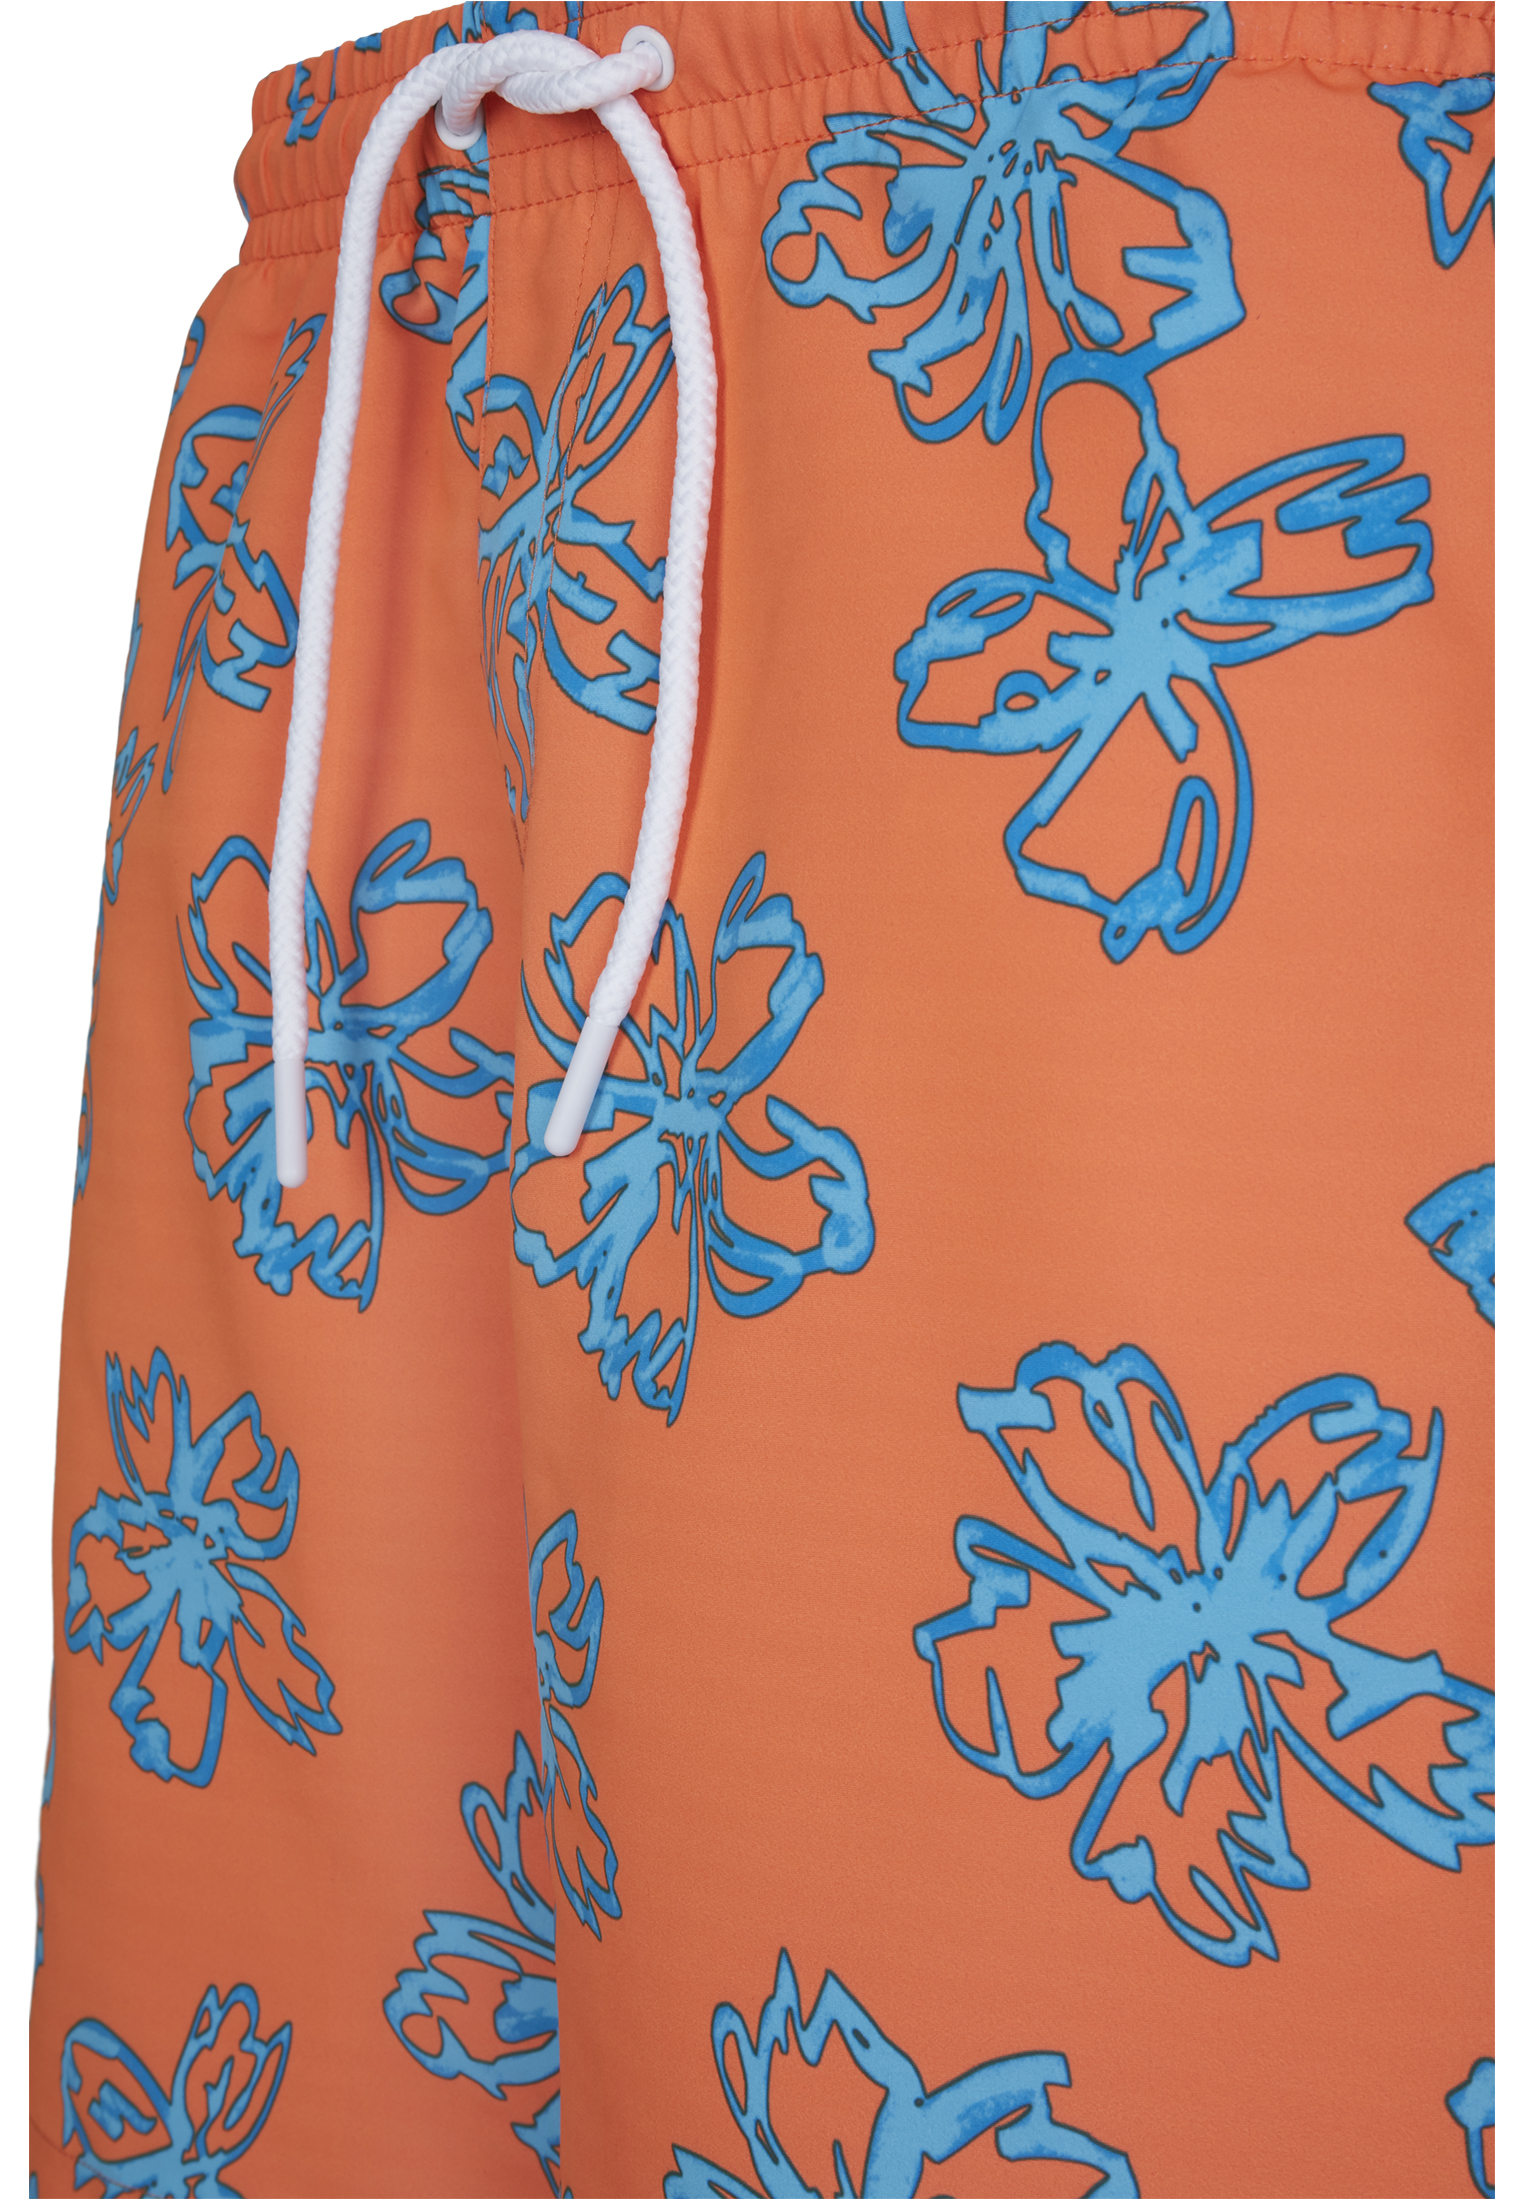 Bademode Floral Swim Shorts in Farbe orange